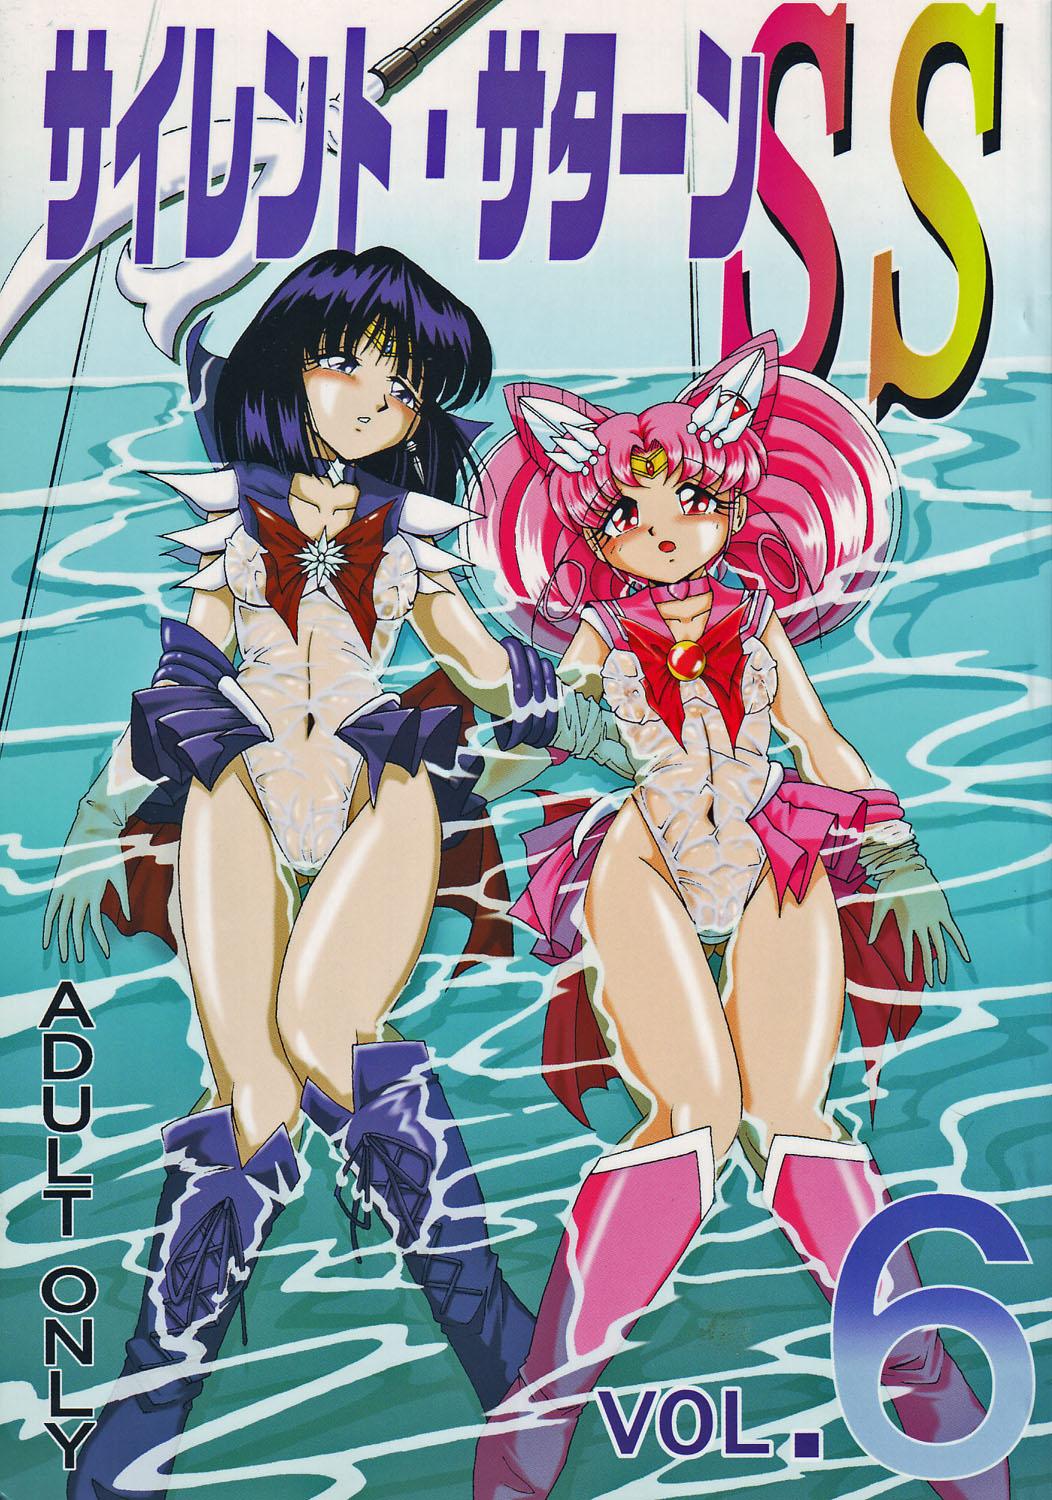 Coeds Silent Saturn SS vol. 6 - Sailor moon Porn - Picture 1